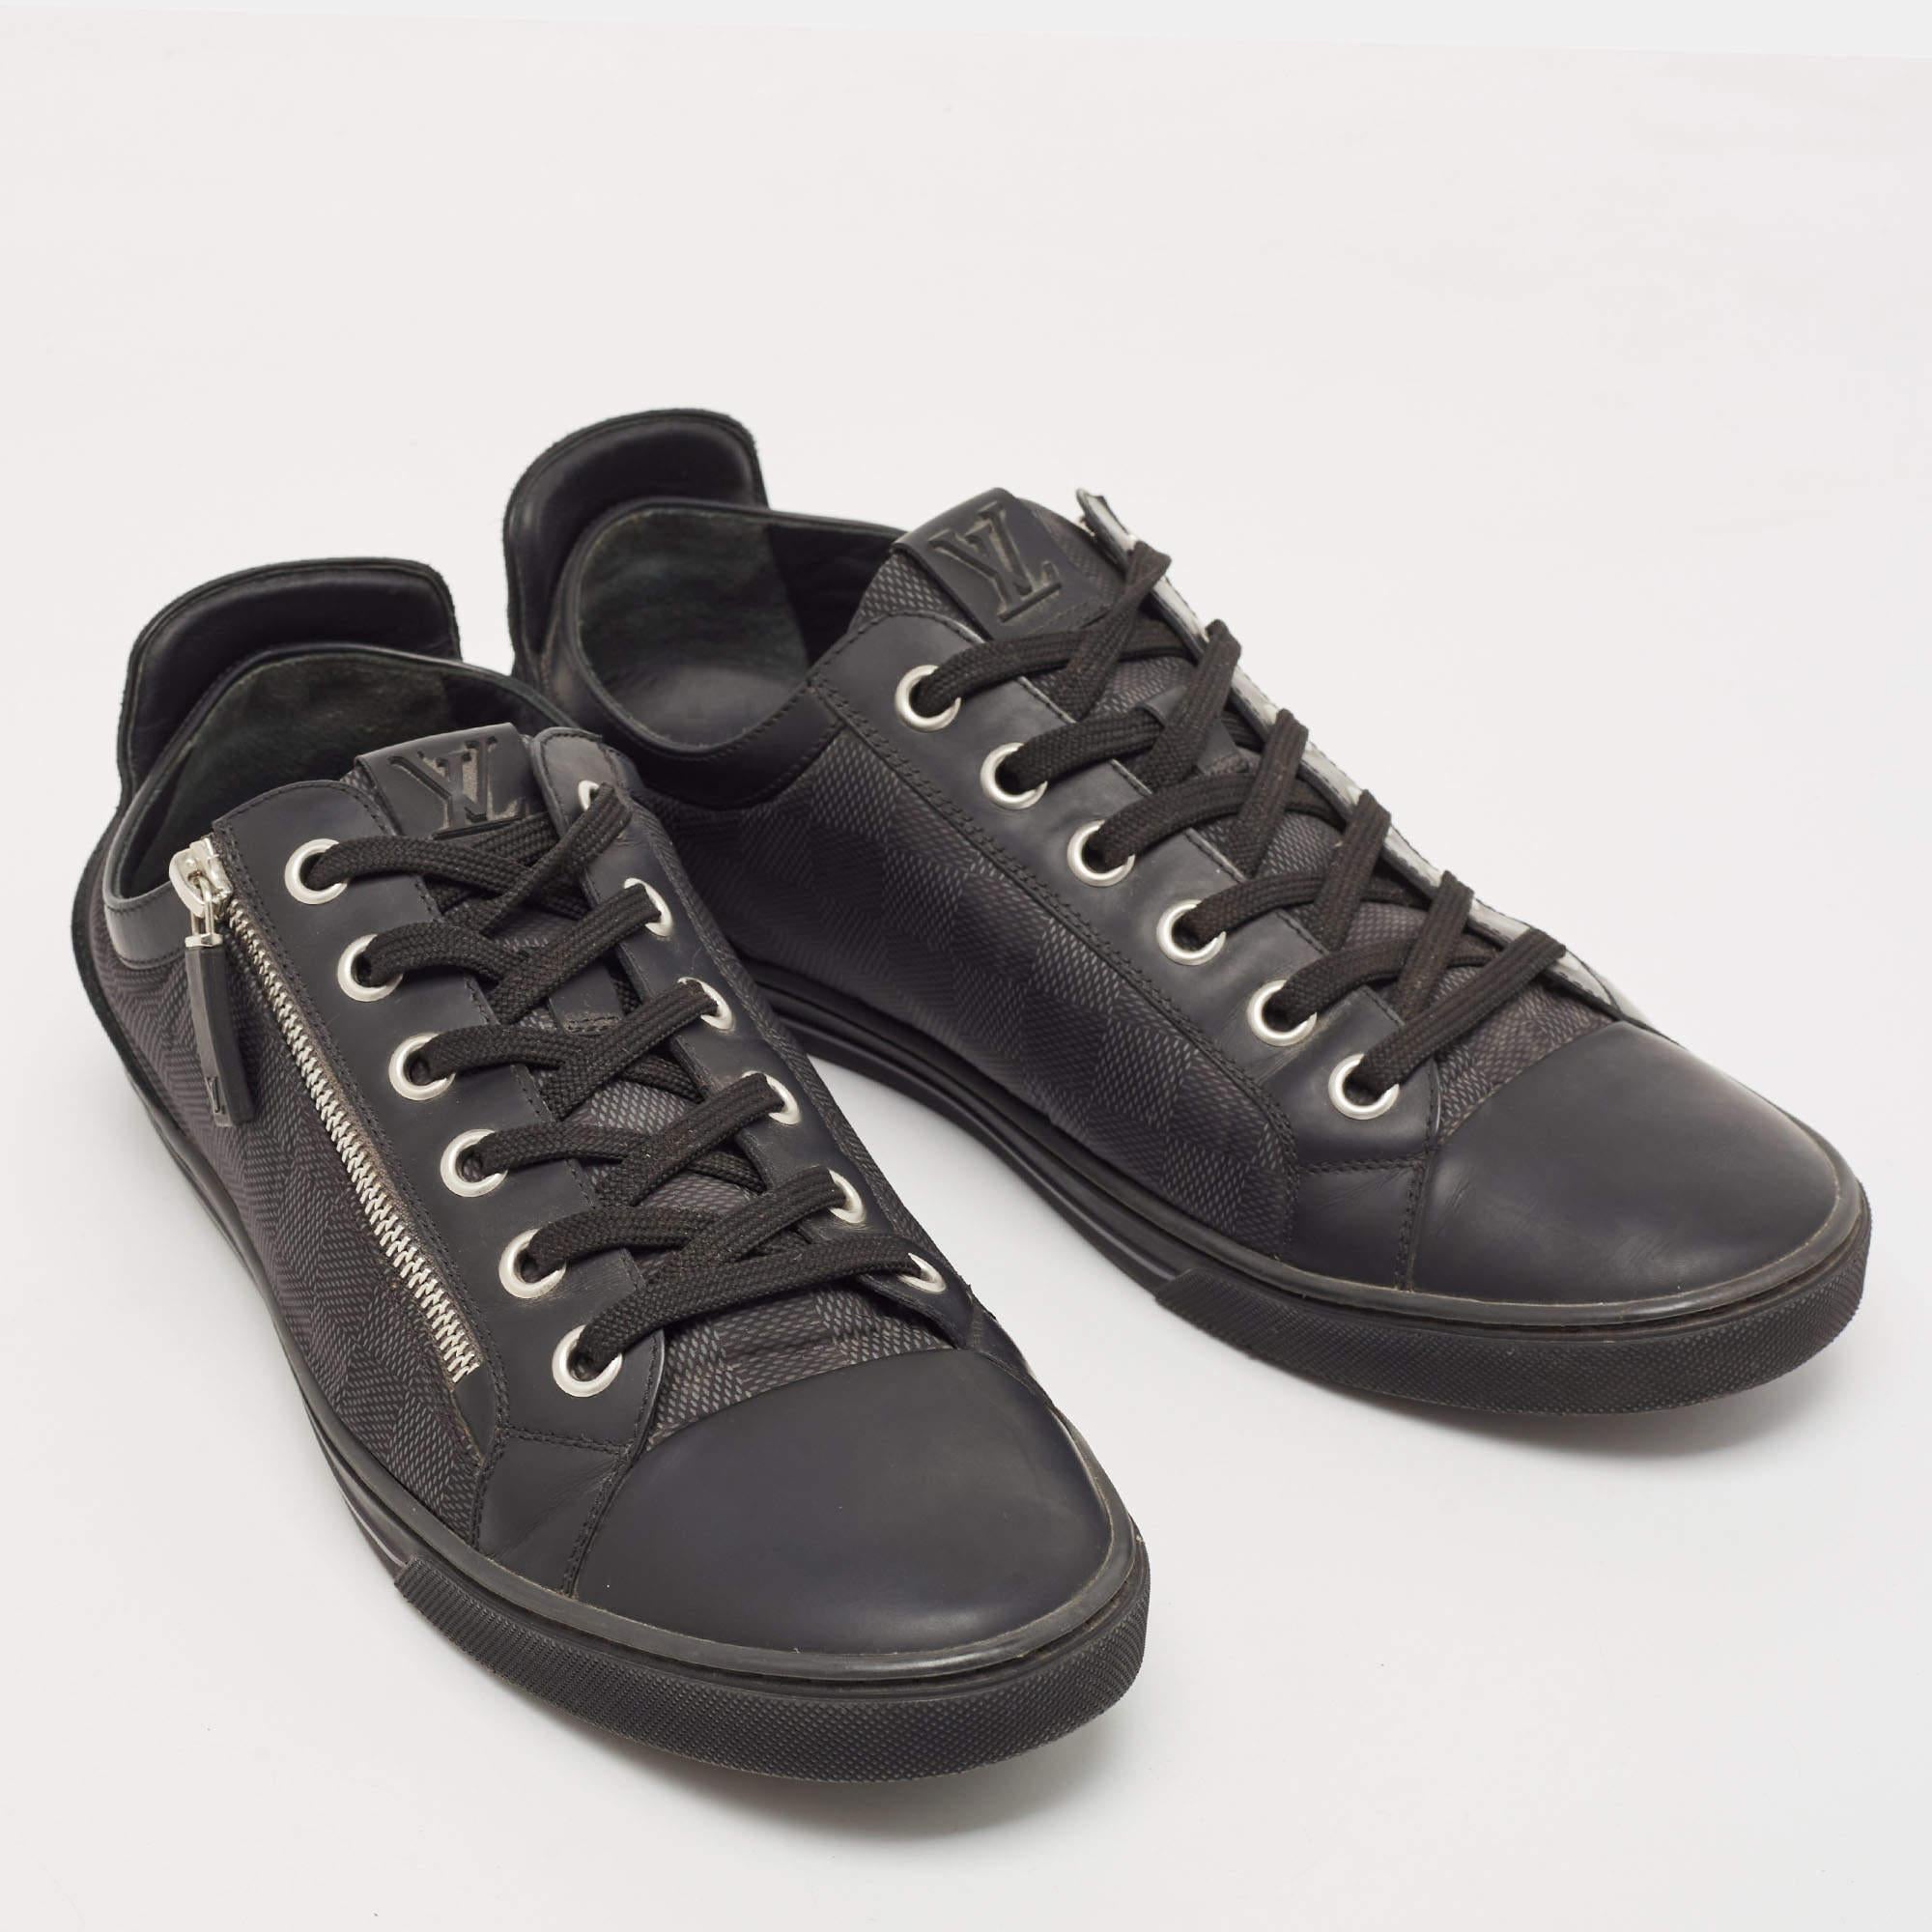 Men's Louis Vuitton Black Damier Ebene Nylon and Leather Sneakers Size 43